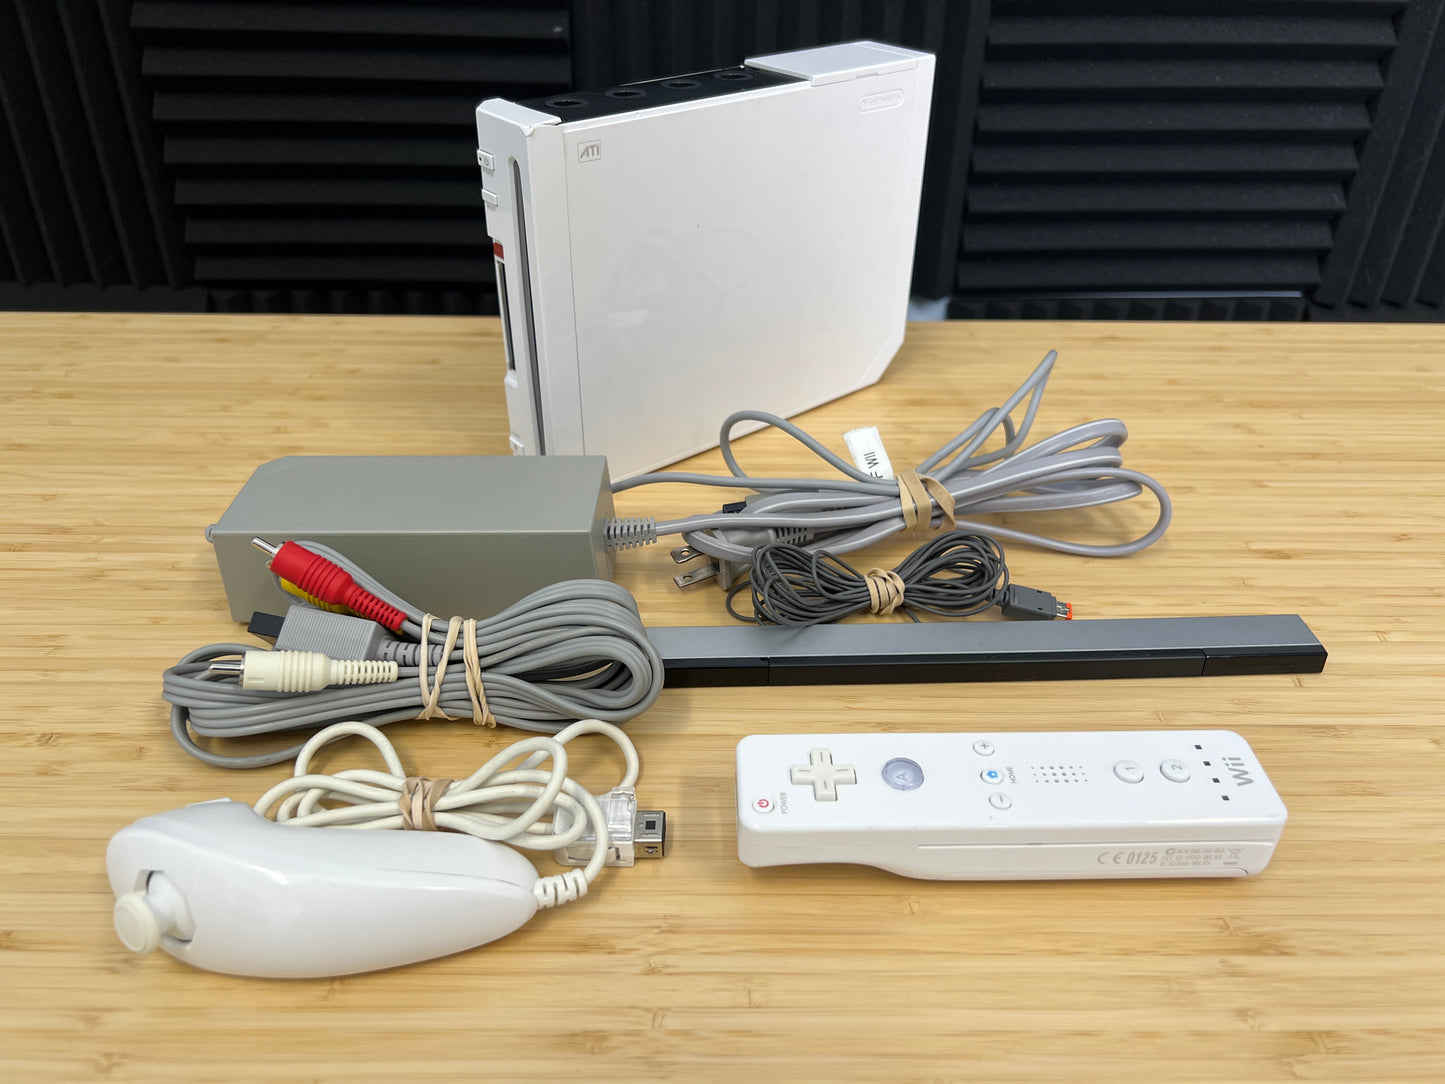 Nintendo Wii White Console - GameCube Compatible - w/ Controller & Cords